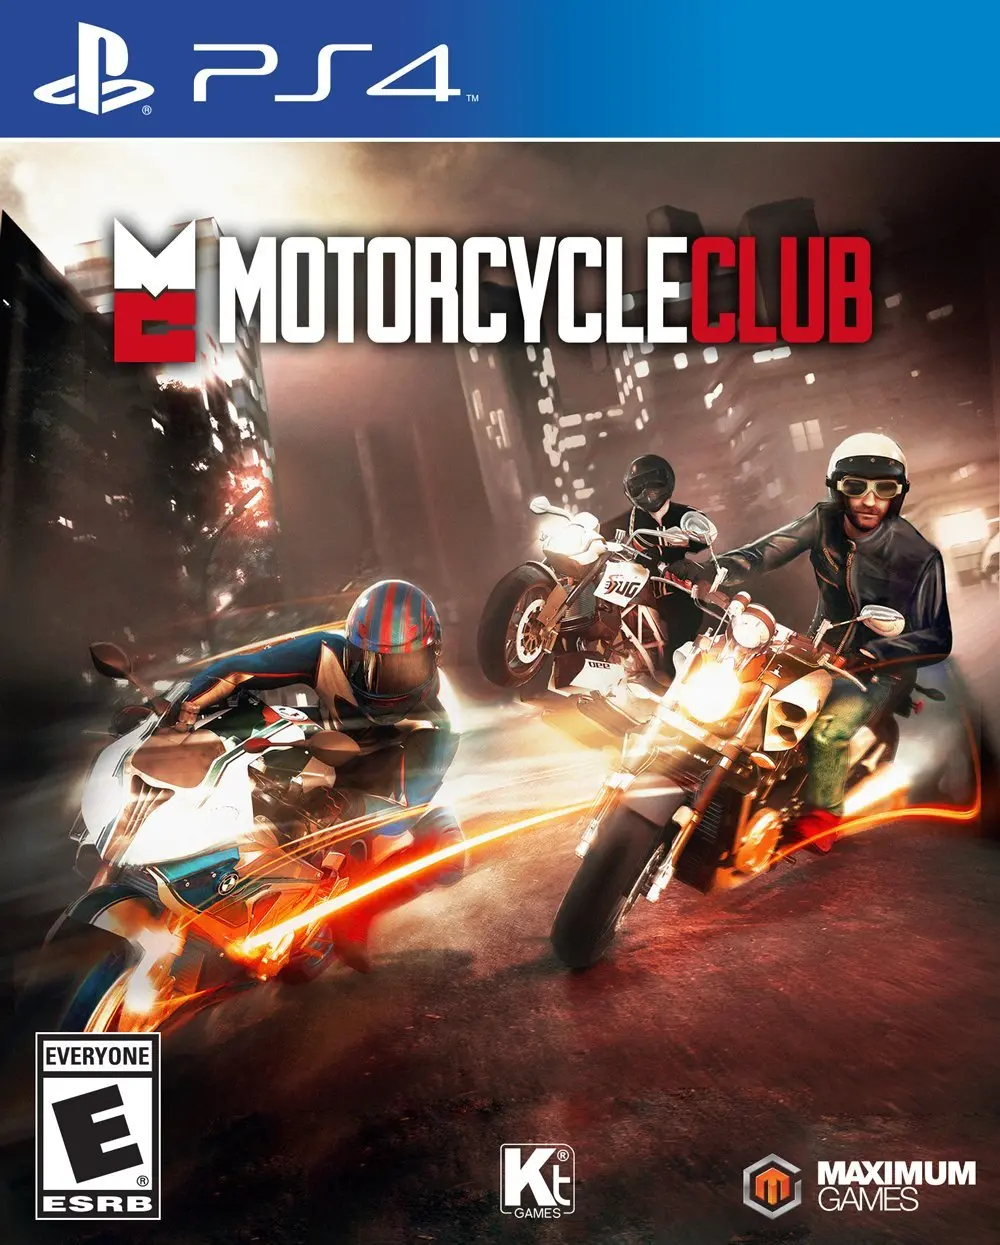 MOTOCLUB-PS4 Motorcycle Club - PS4-1